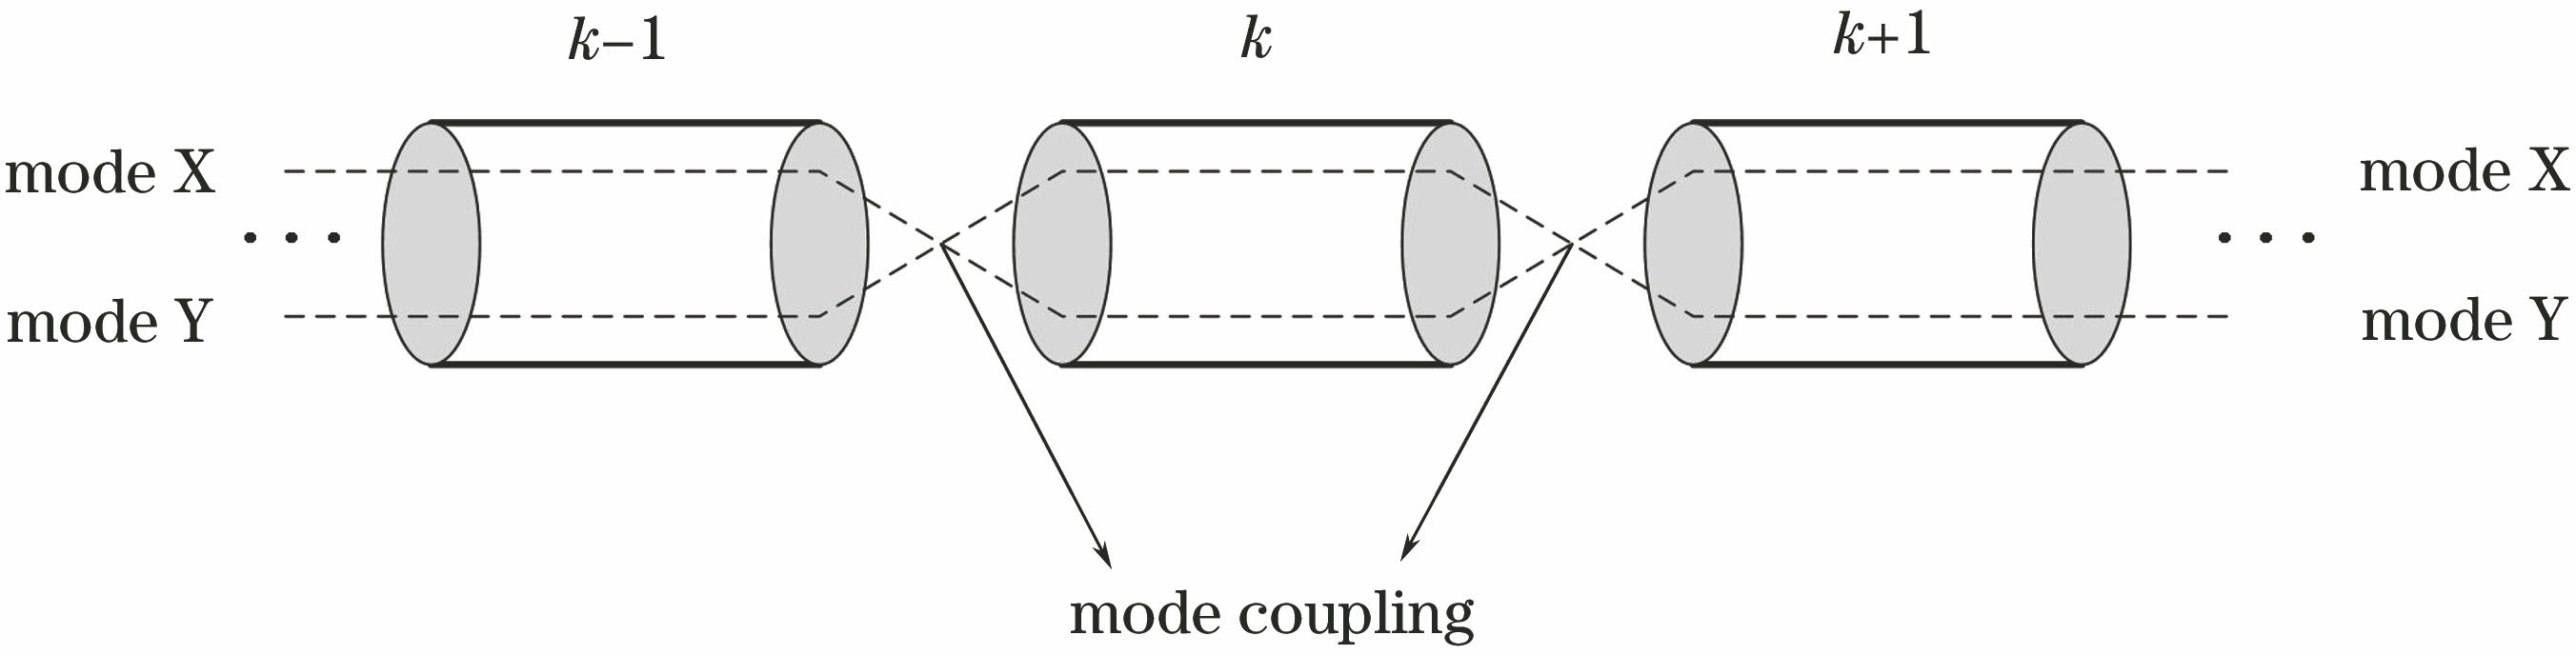 Piecewise link model of the few-mode fiber